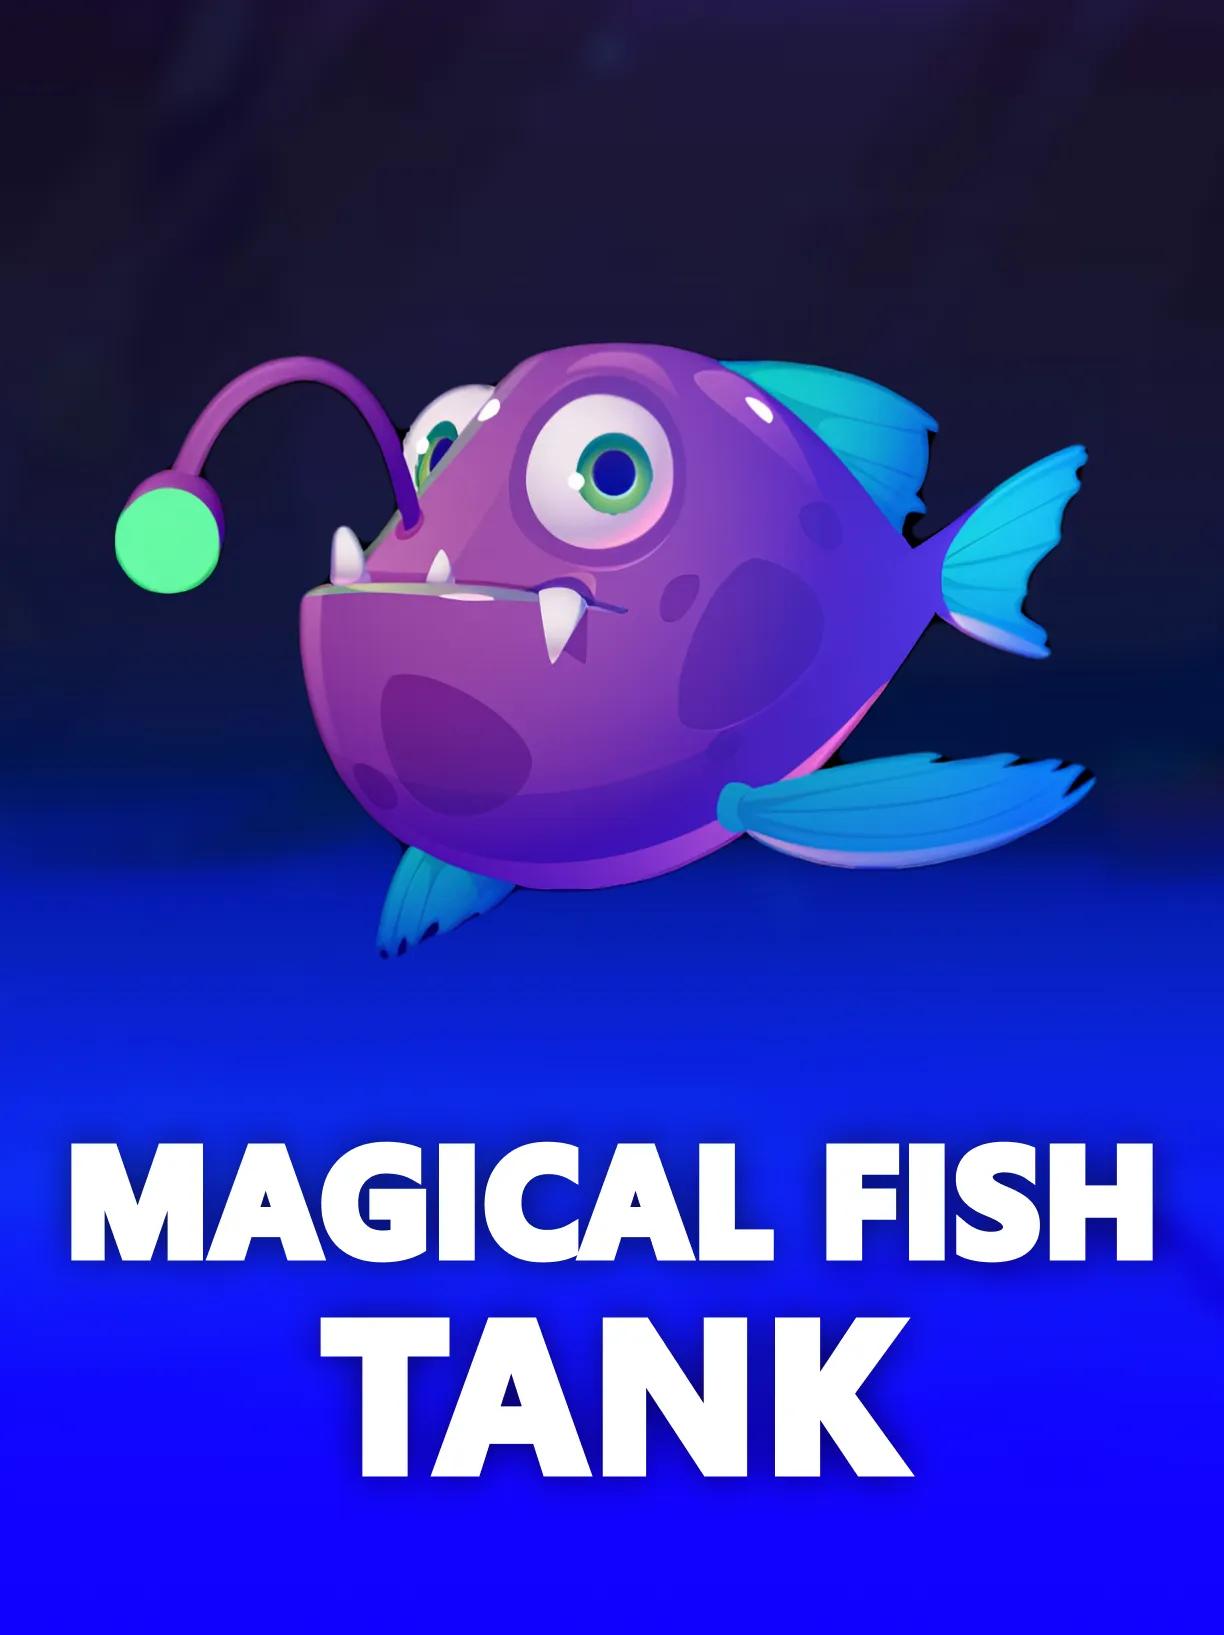 ug_Magical_Fish_Tank_square.webp